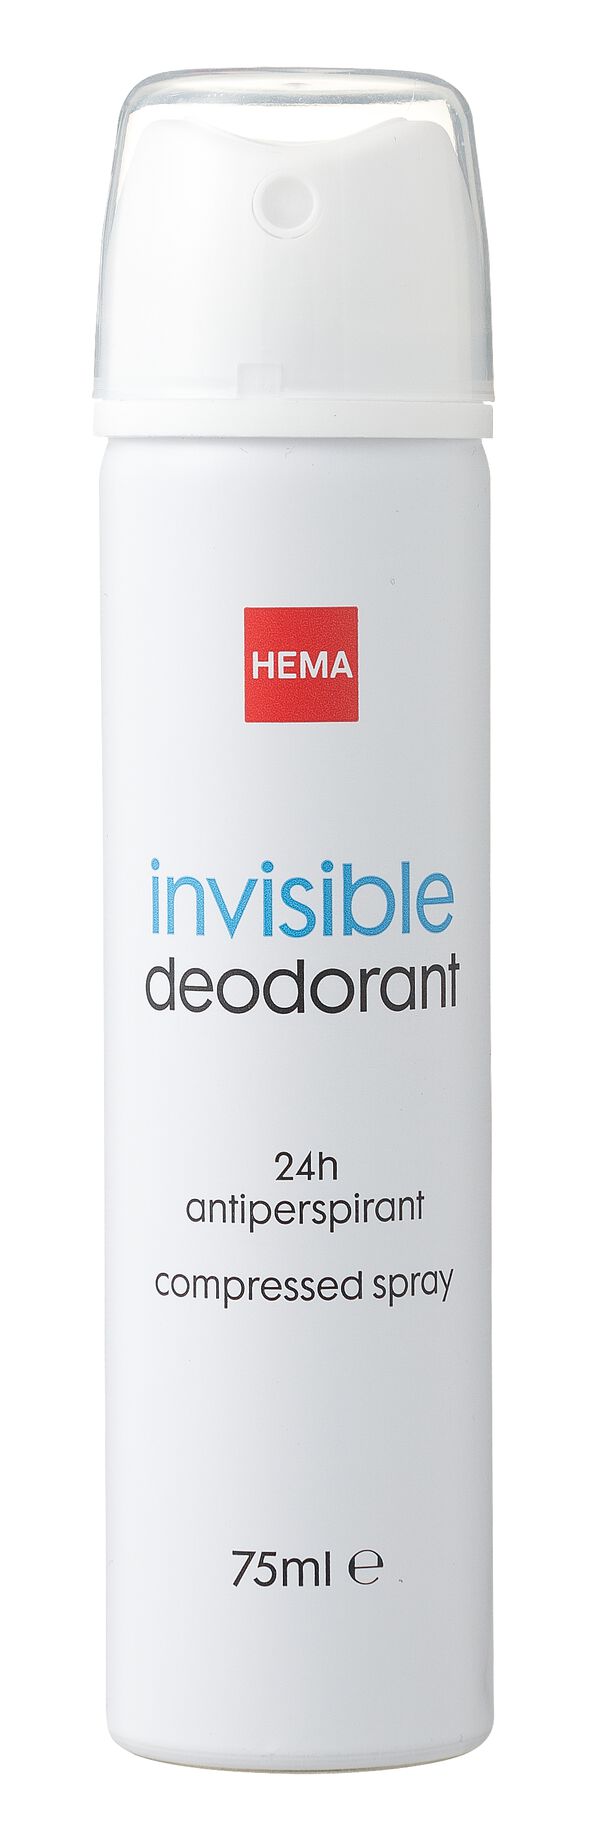 deodorant spray invisible - 11310247 - HEMA